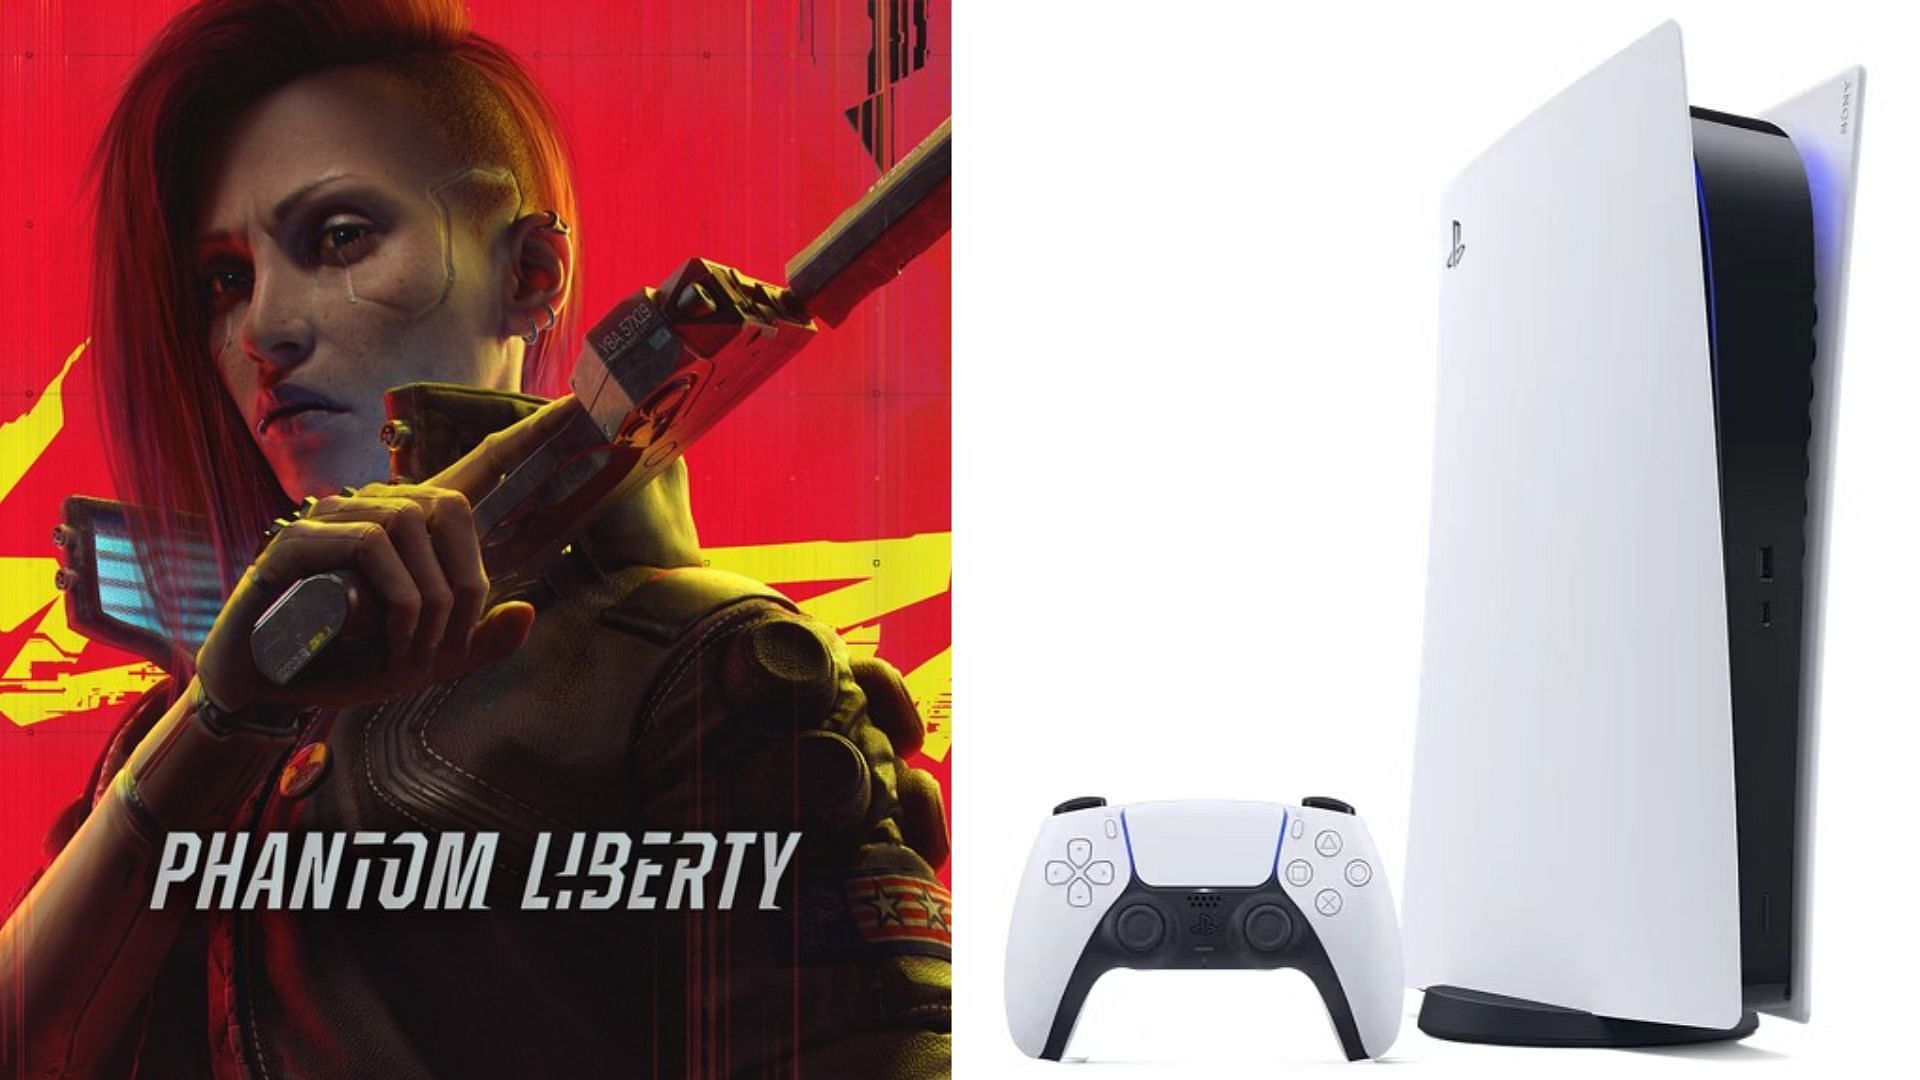 Cyberpunk 2077 & Phantom Liberty Bundle Xbox Series X